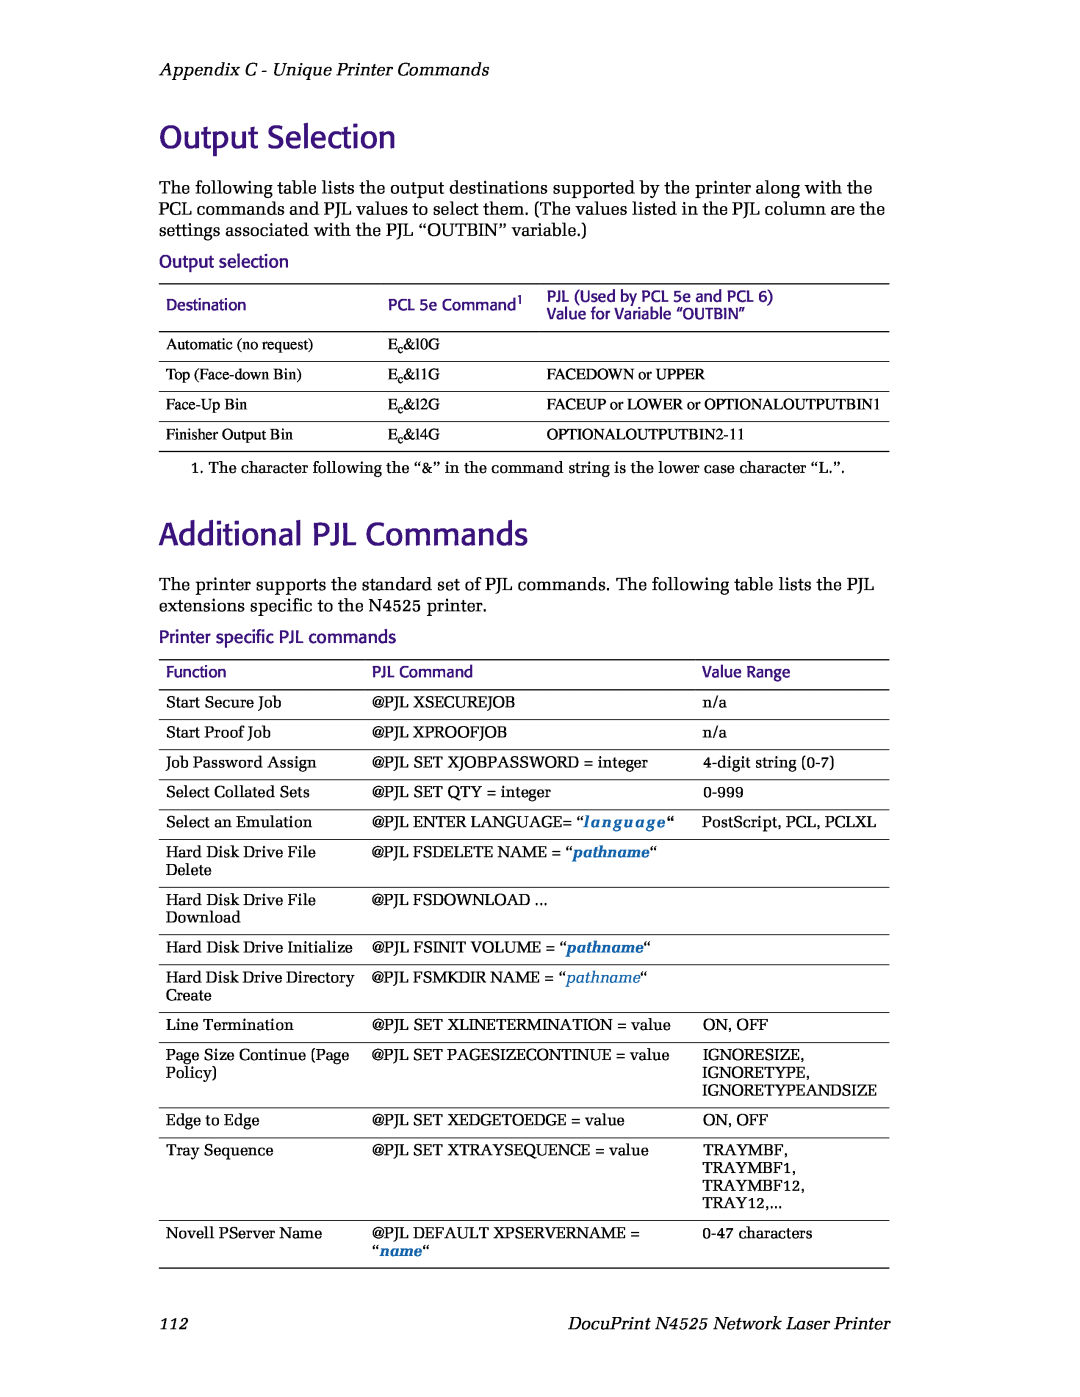 Xerox N4525 manual Output Selection, Additional PJL Commands, Appendix C - Unique Printer Commands, Output selection 